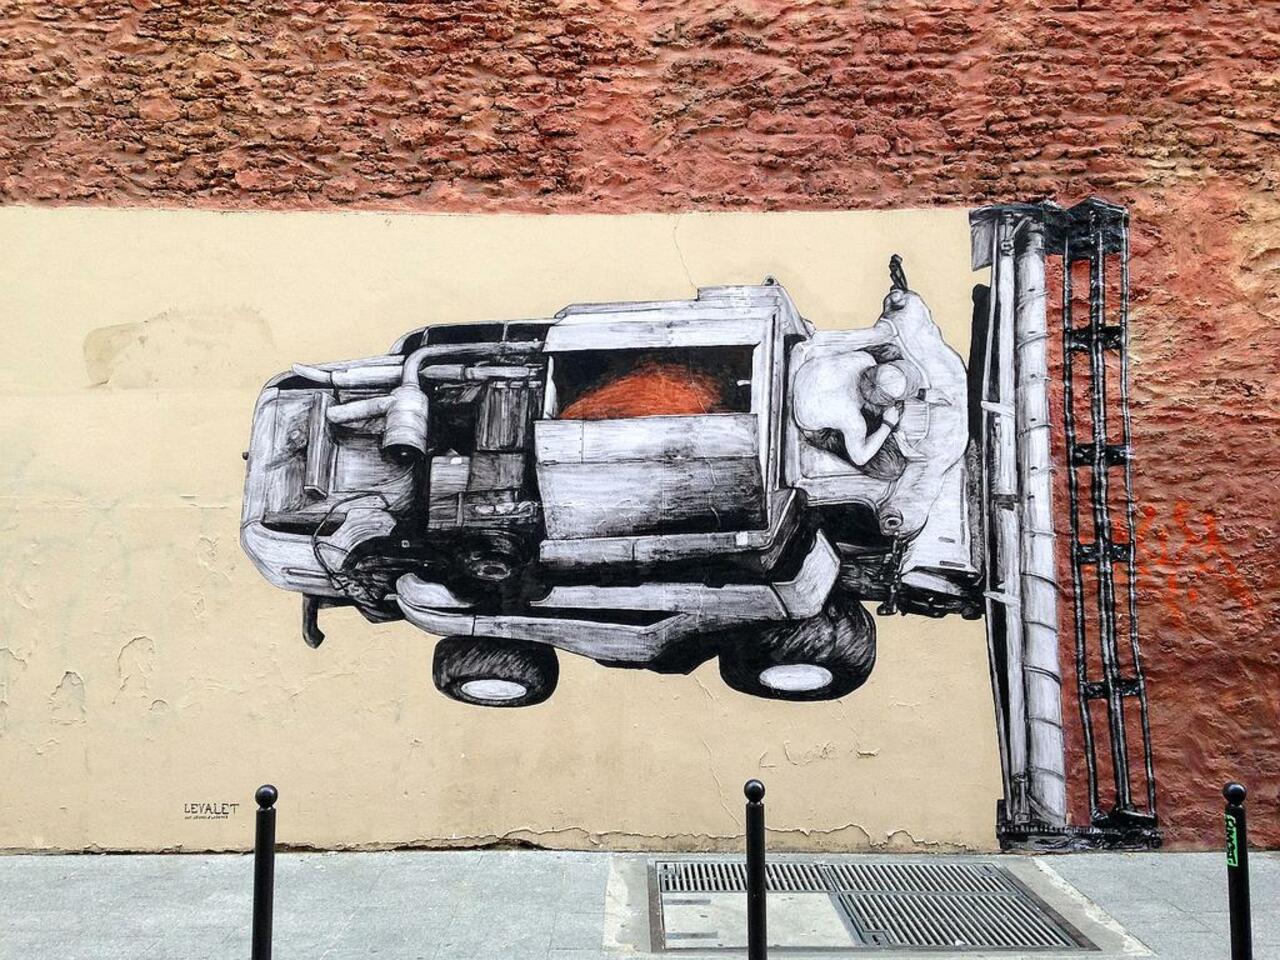 Street Art by Levalet in #Paris http://www.urbacolors.com #art #mural #graffiti #streetart http://t.co/L4eTyOEOMd